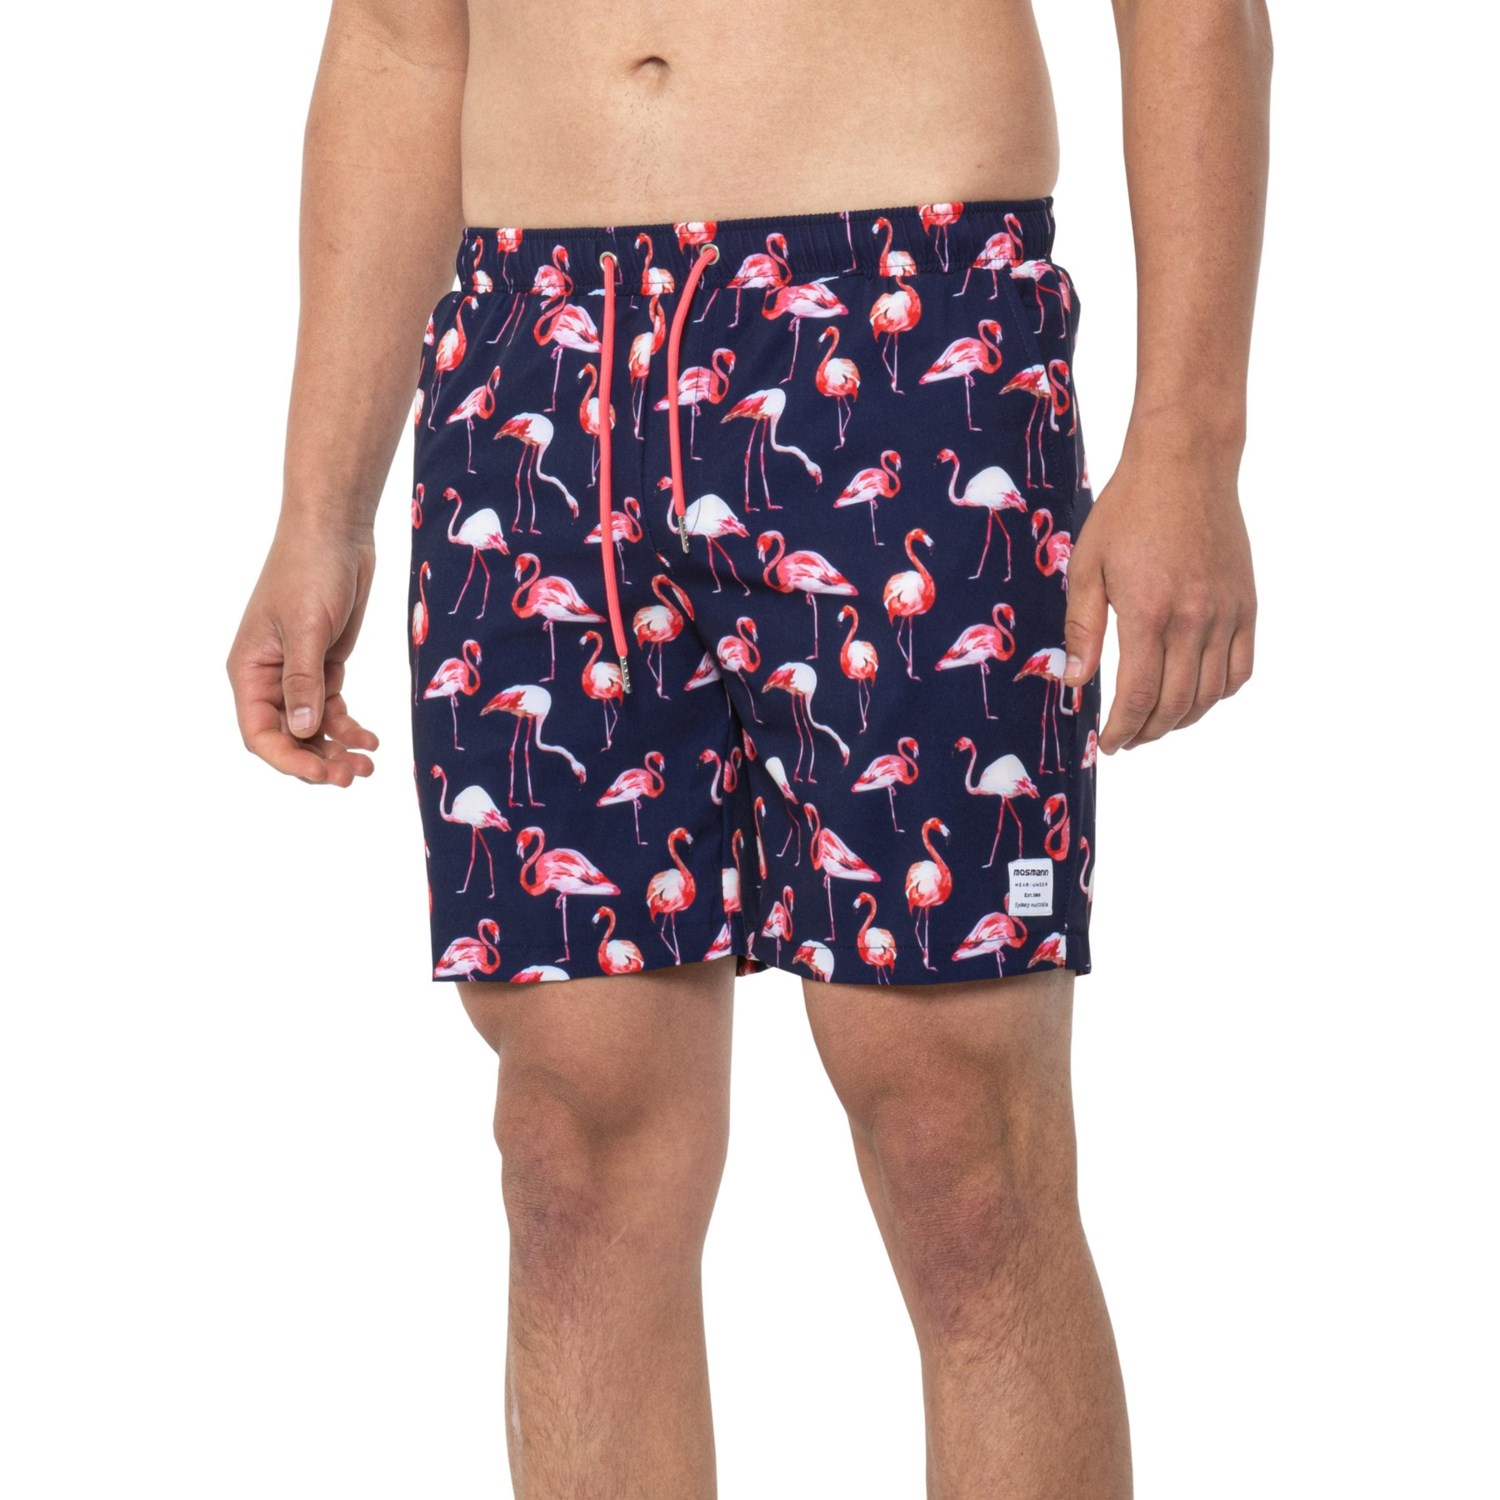 Mosmann Flamingos Swim Shorts (For Men) - Save 54%